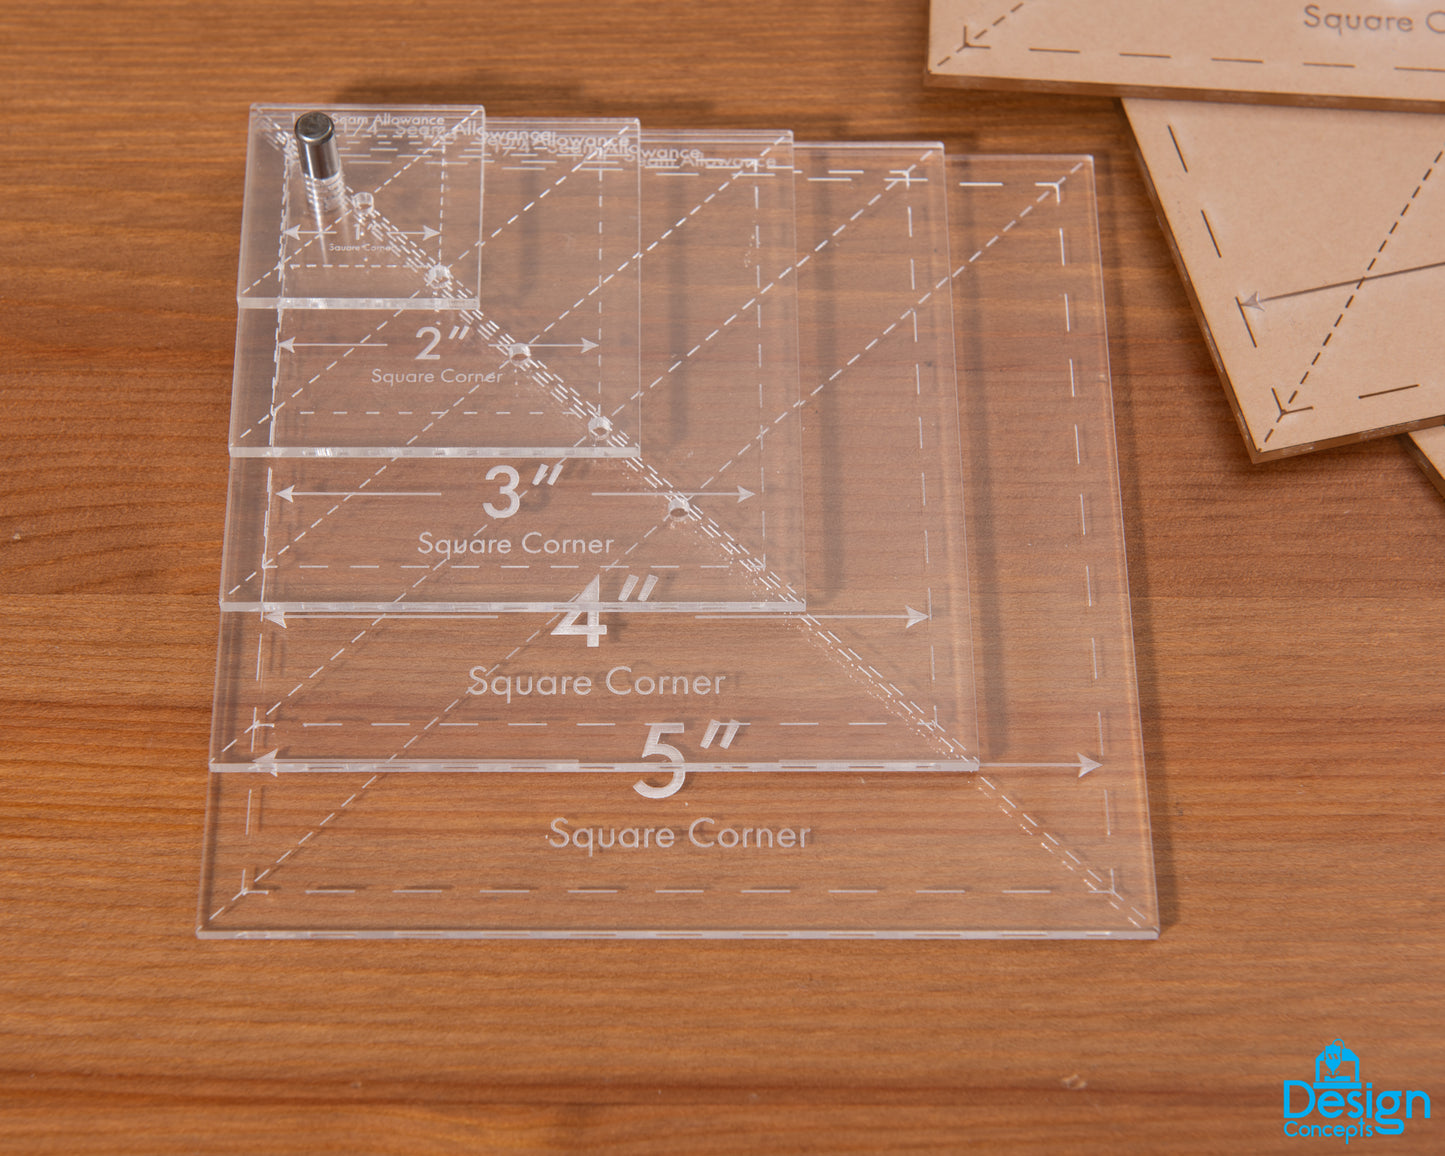 8 Piece Kit Square Acrylic Pattern Templates Quilting Sewing Leathercraft 1in 2in 3in 4in 5in 6in 7in 8in - Design Concepts Chi